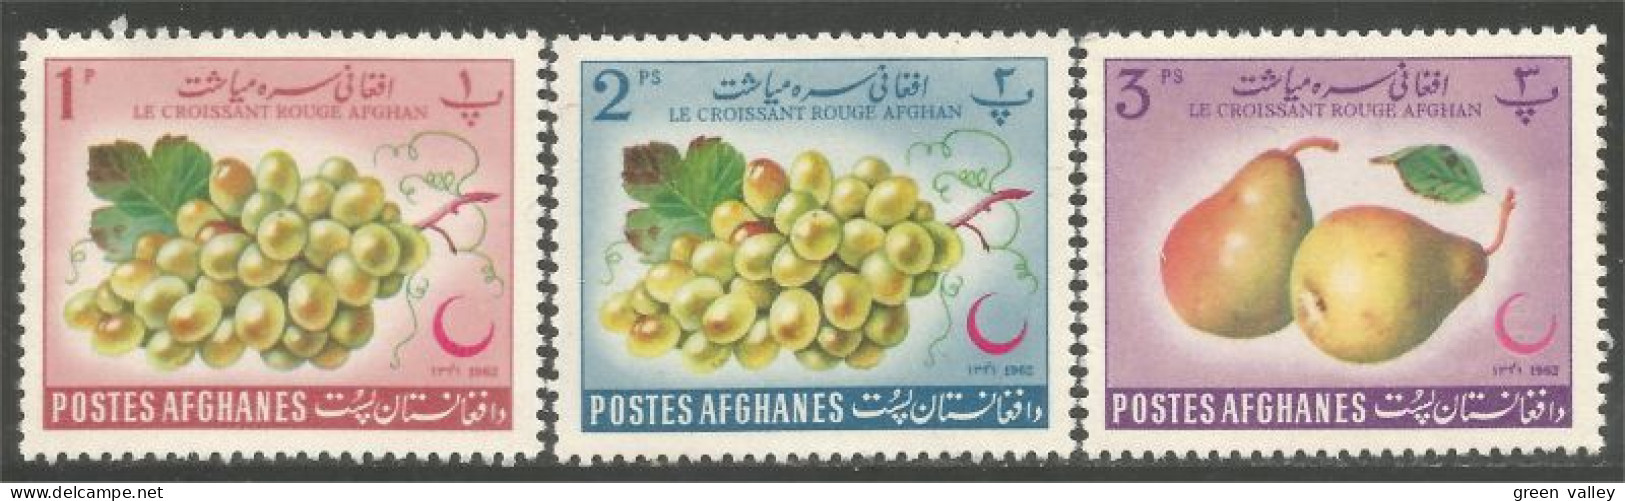 FR-3a Afghanistan Fruits Raisin Grape Wine Wein Traube Poire Pear Birne Pera Peer MH * Neuf CH - Fruits